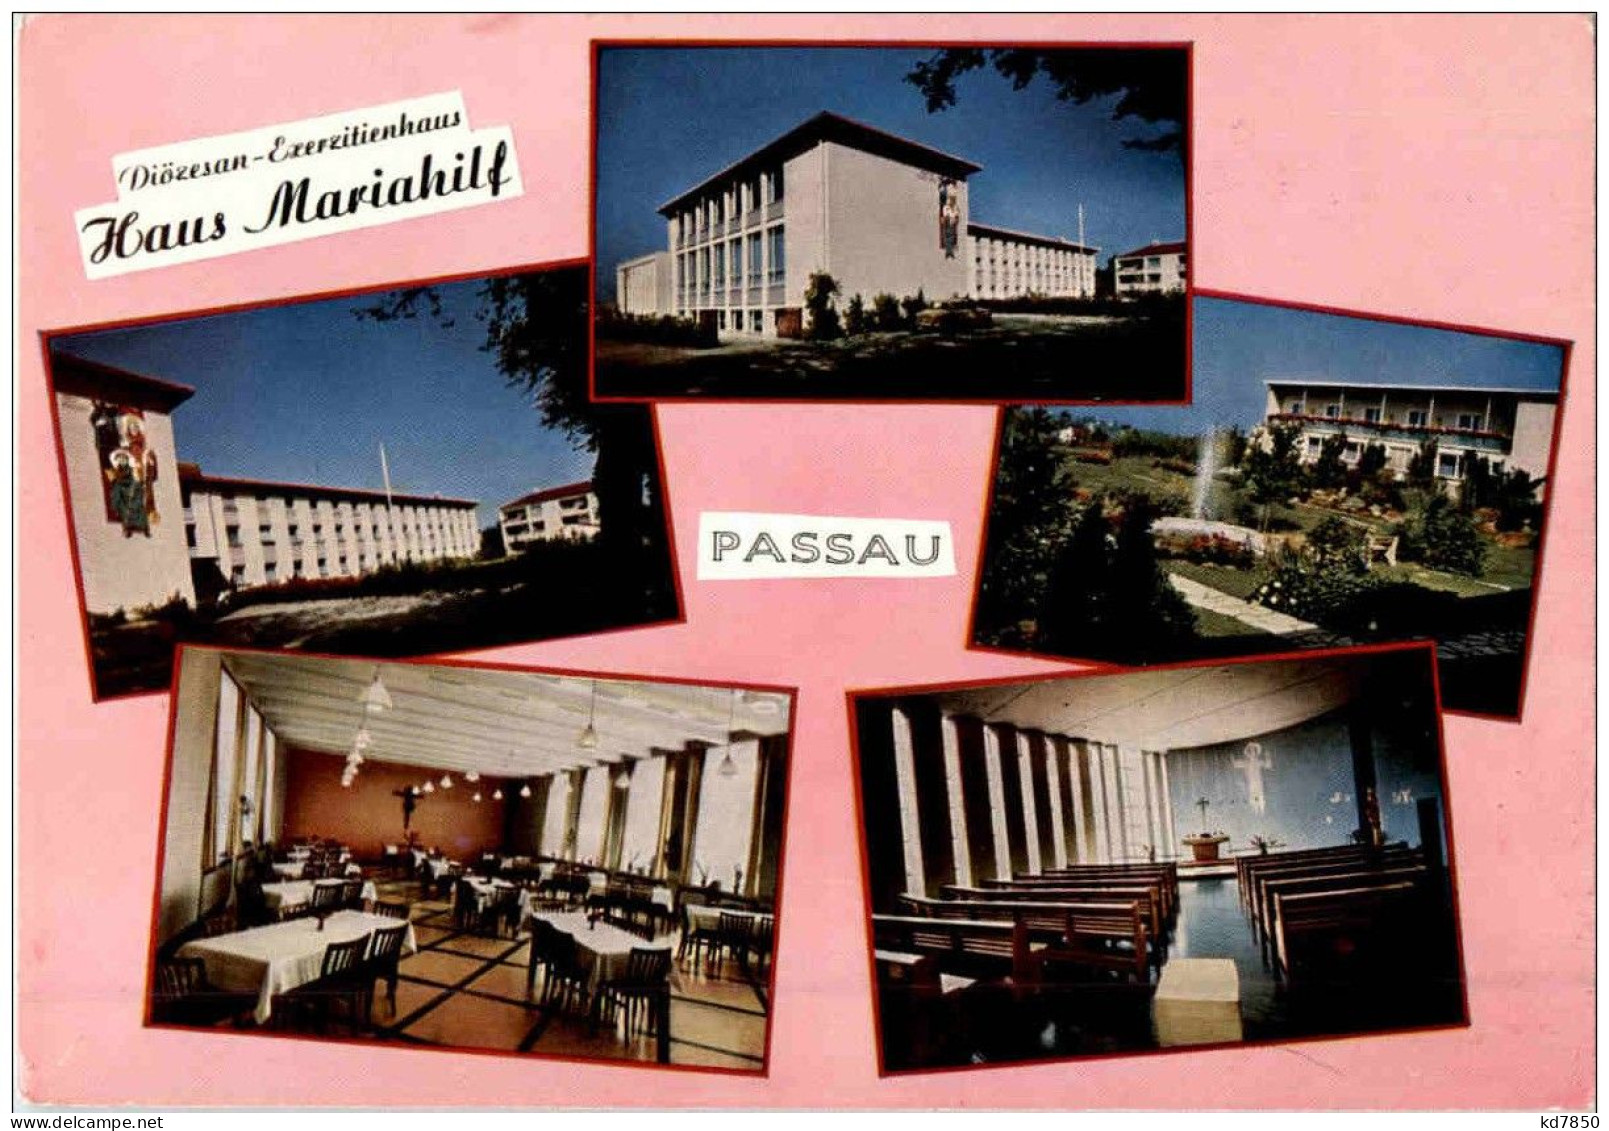 Passau - Diözesan Haus Mariahilf - Passau